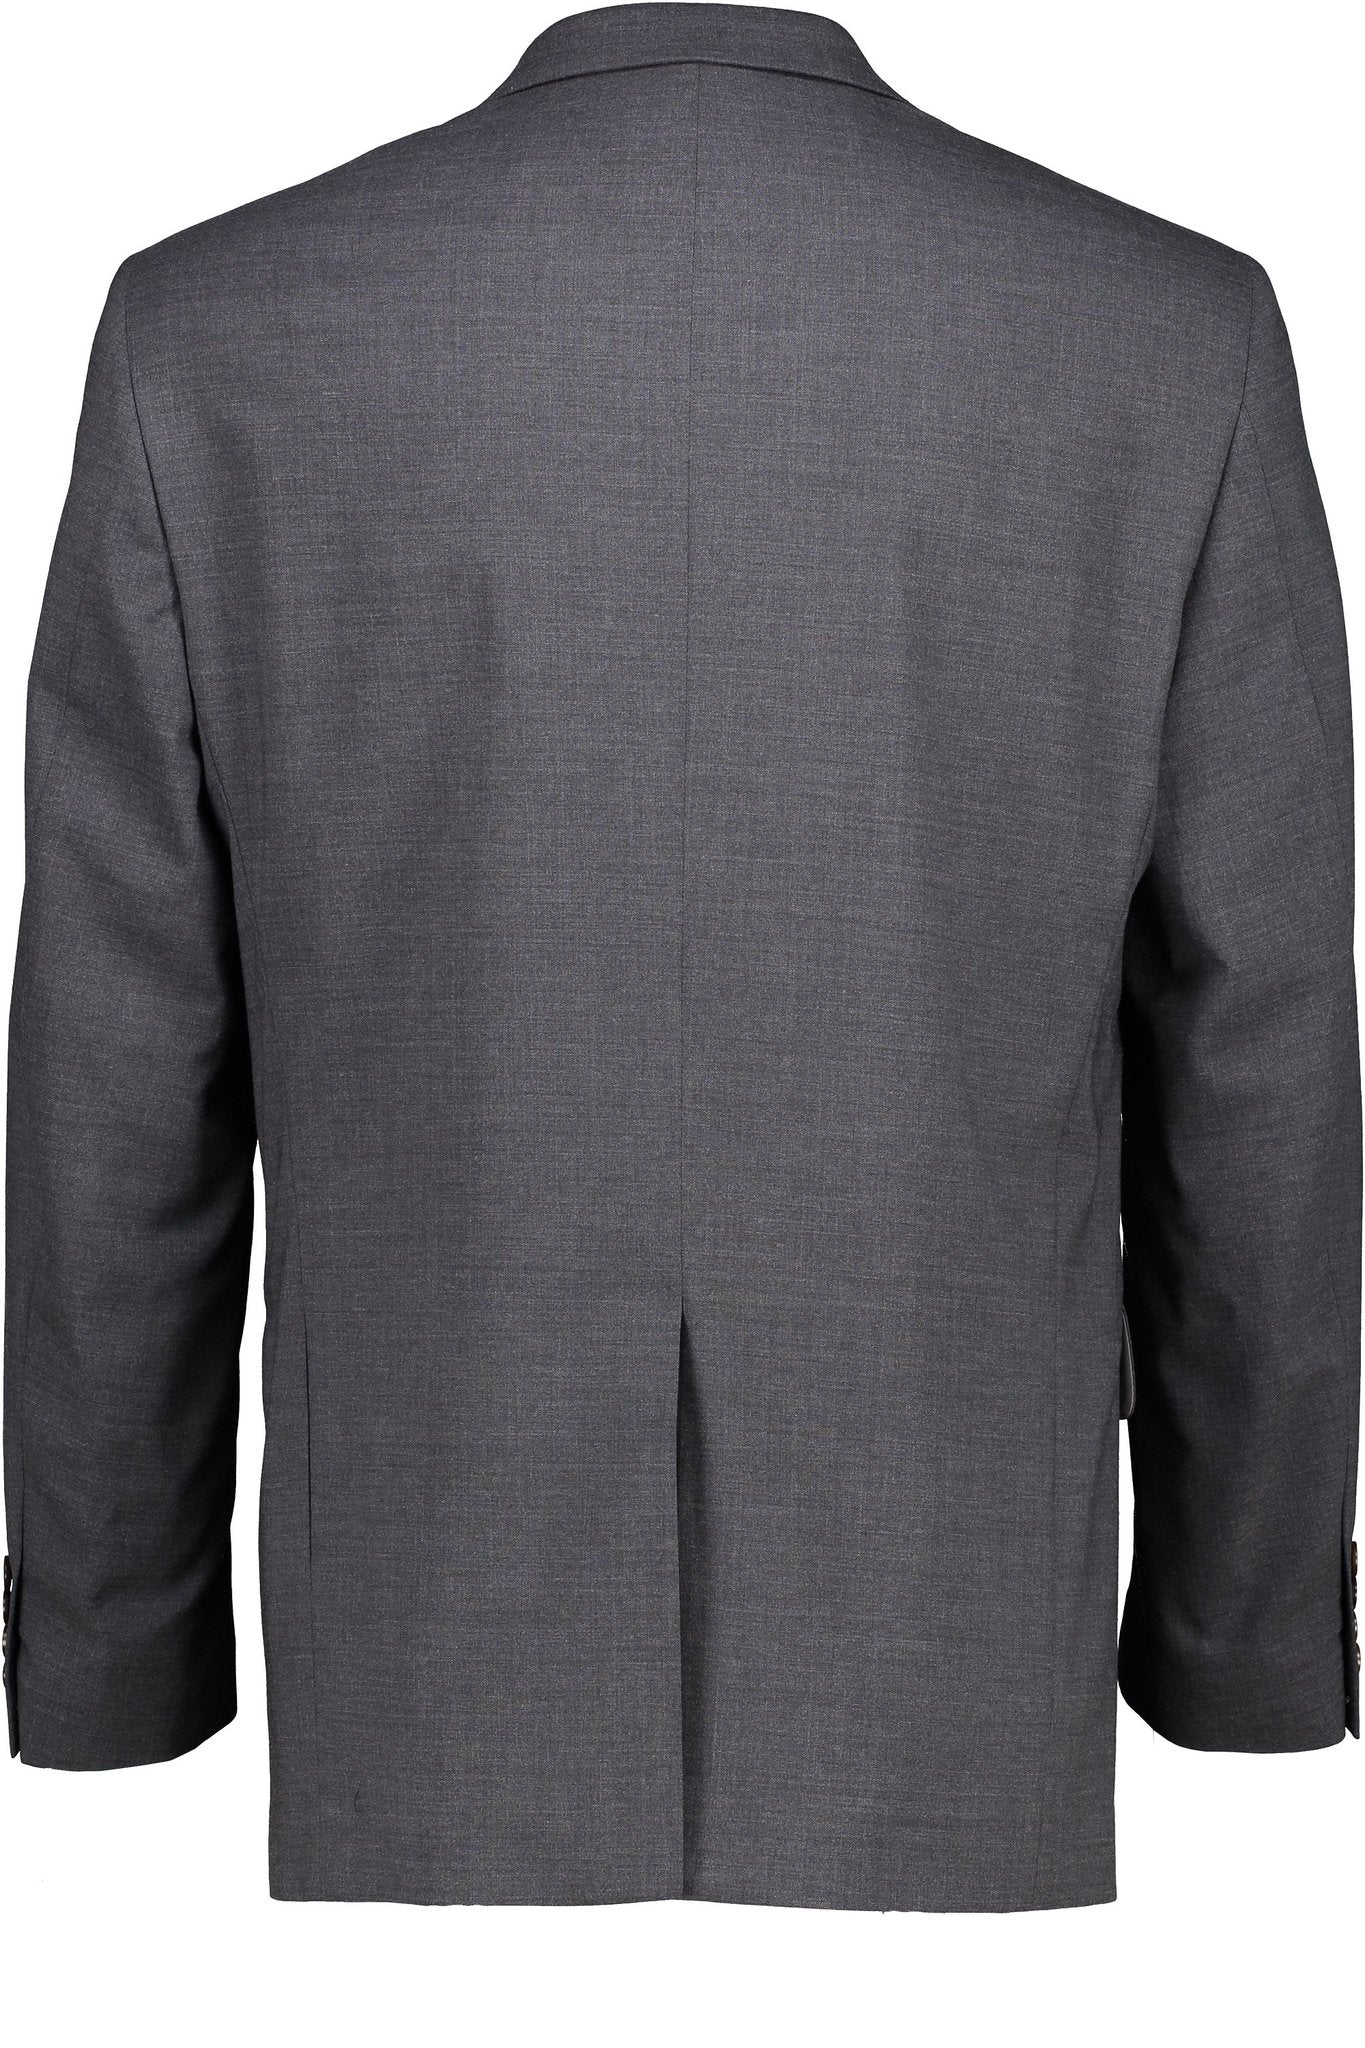 Classic Fit Grey H-Tech Wool Suit Separate Jacket -  Hardwick.com